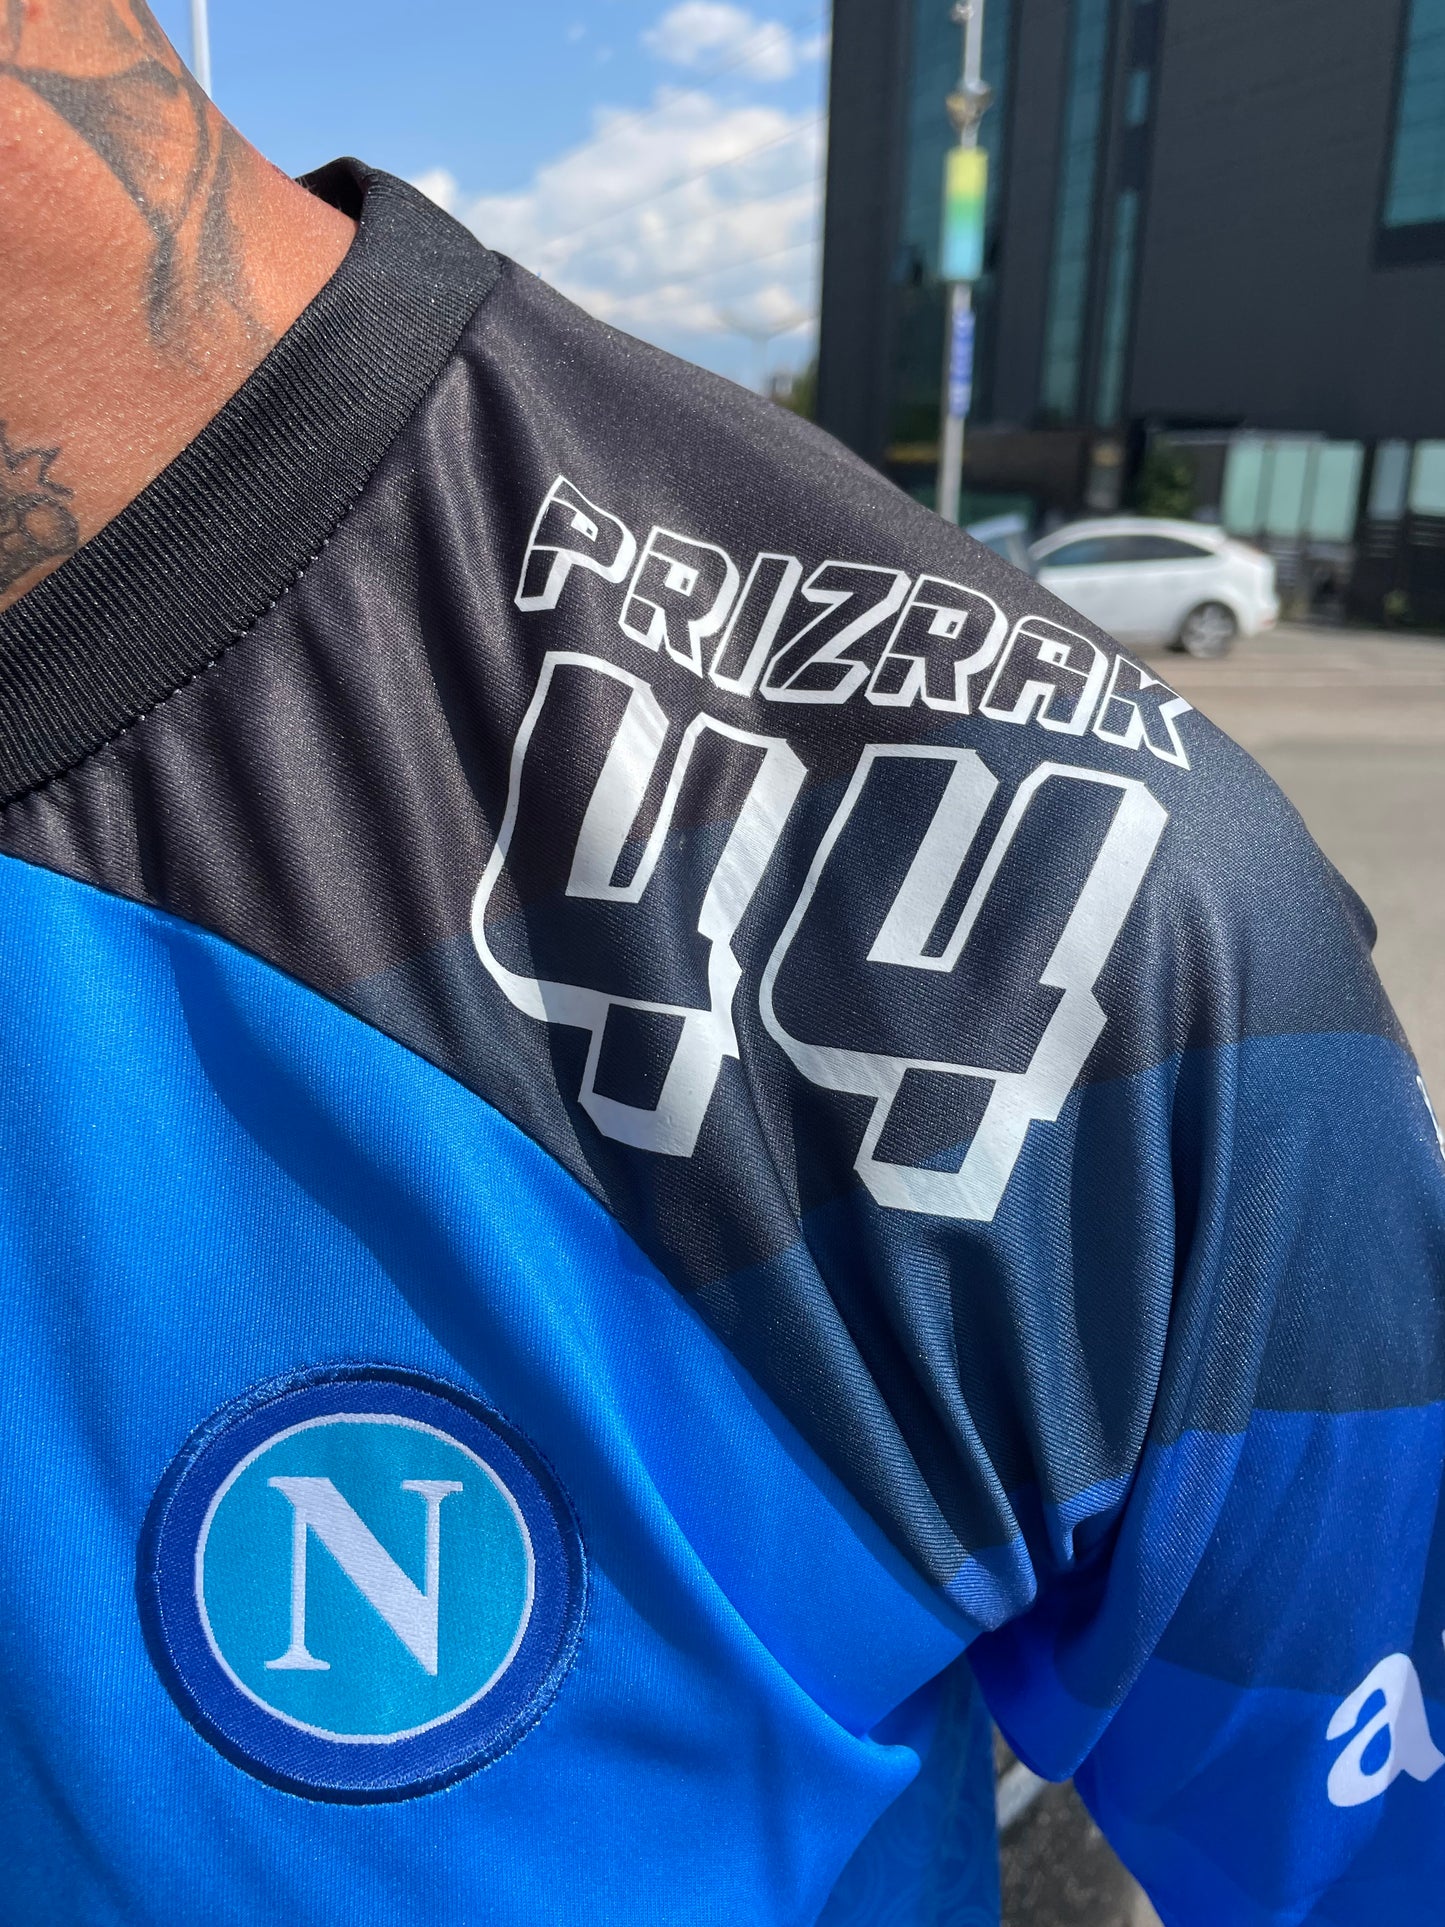 PRIZRAK x Napoli  "CAMORRADONA" blue shirt